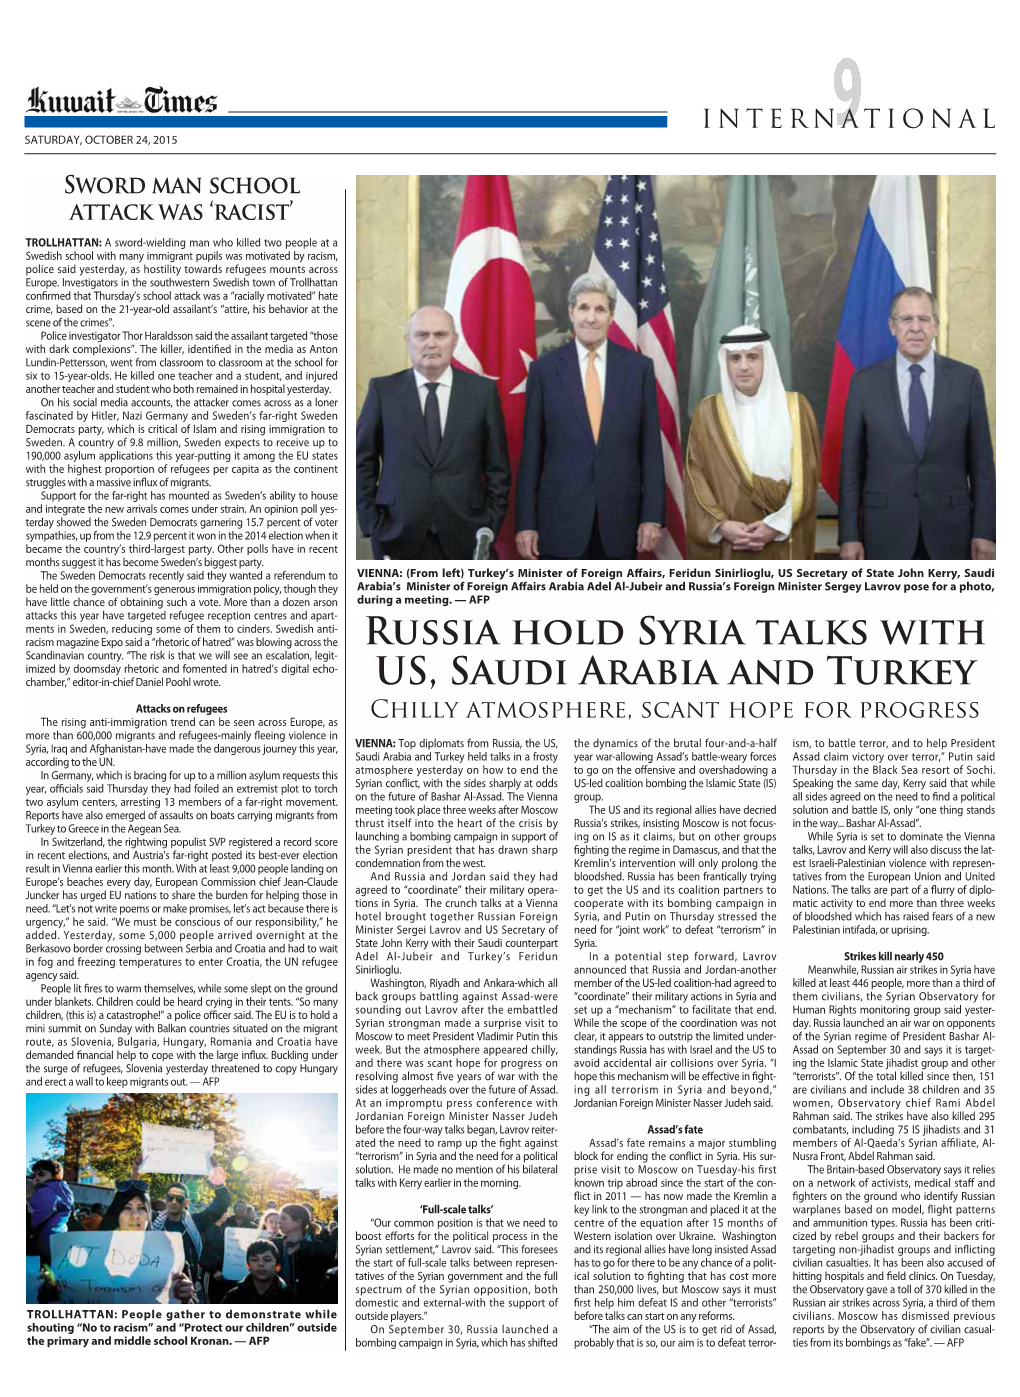 Russia Hold Syria Talks with US, Saudi Arabia and Turkey